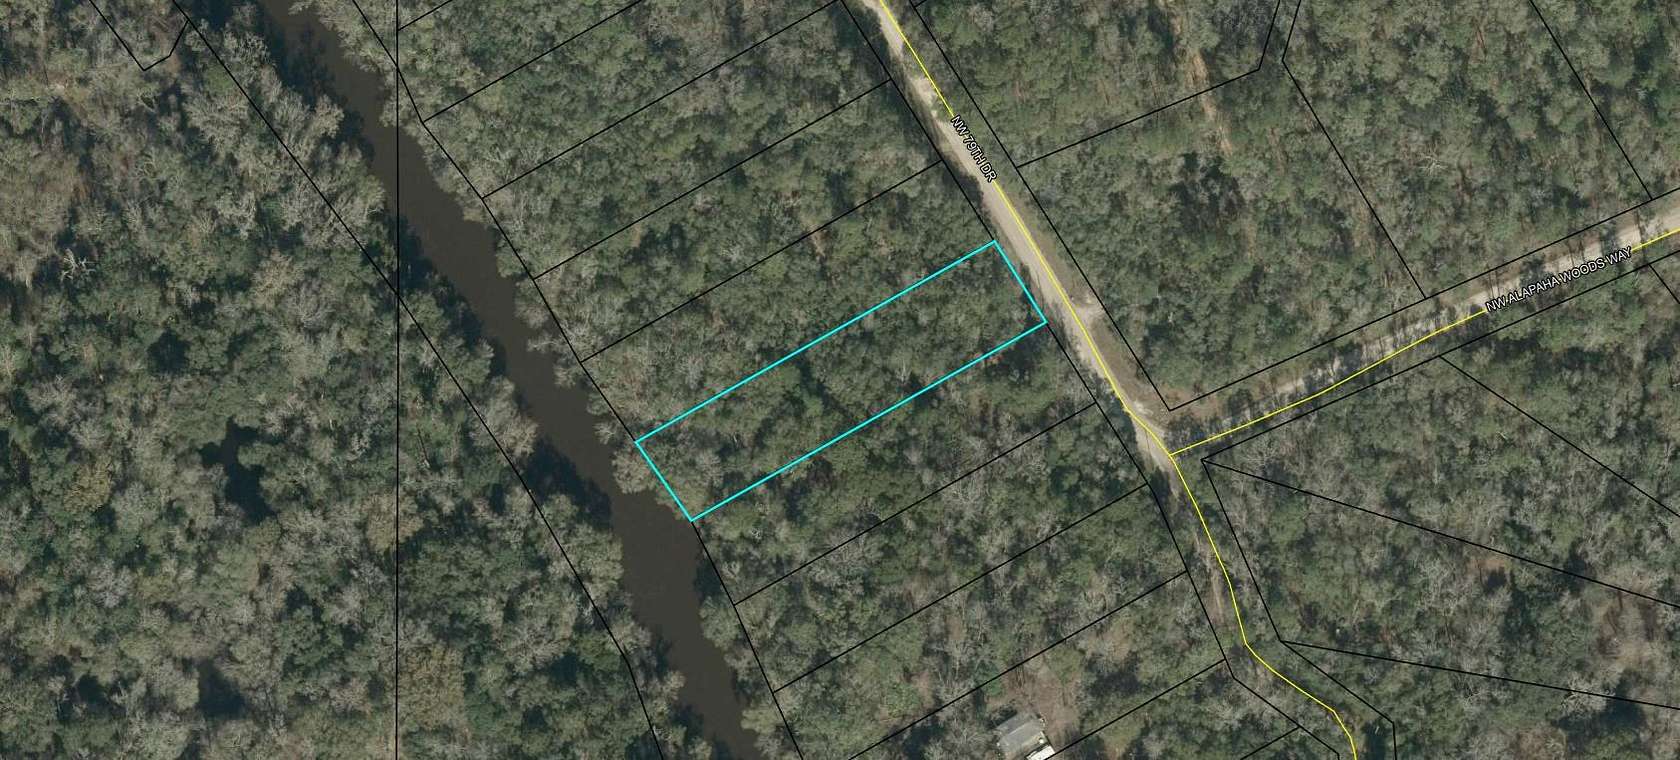 0.88 Acres of Land for Sale in Jasper, Florida